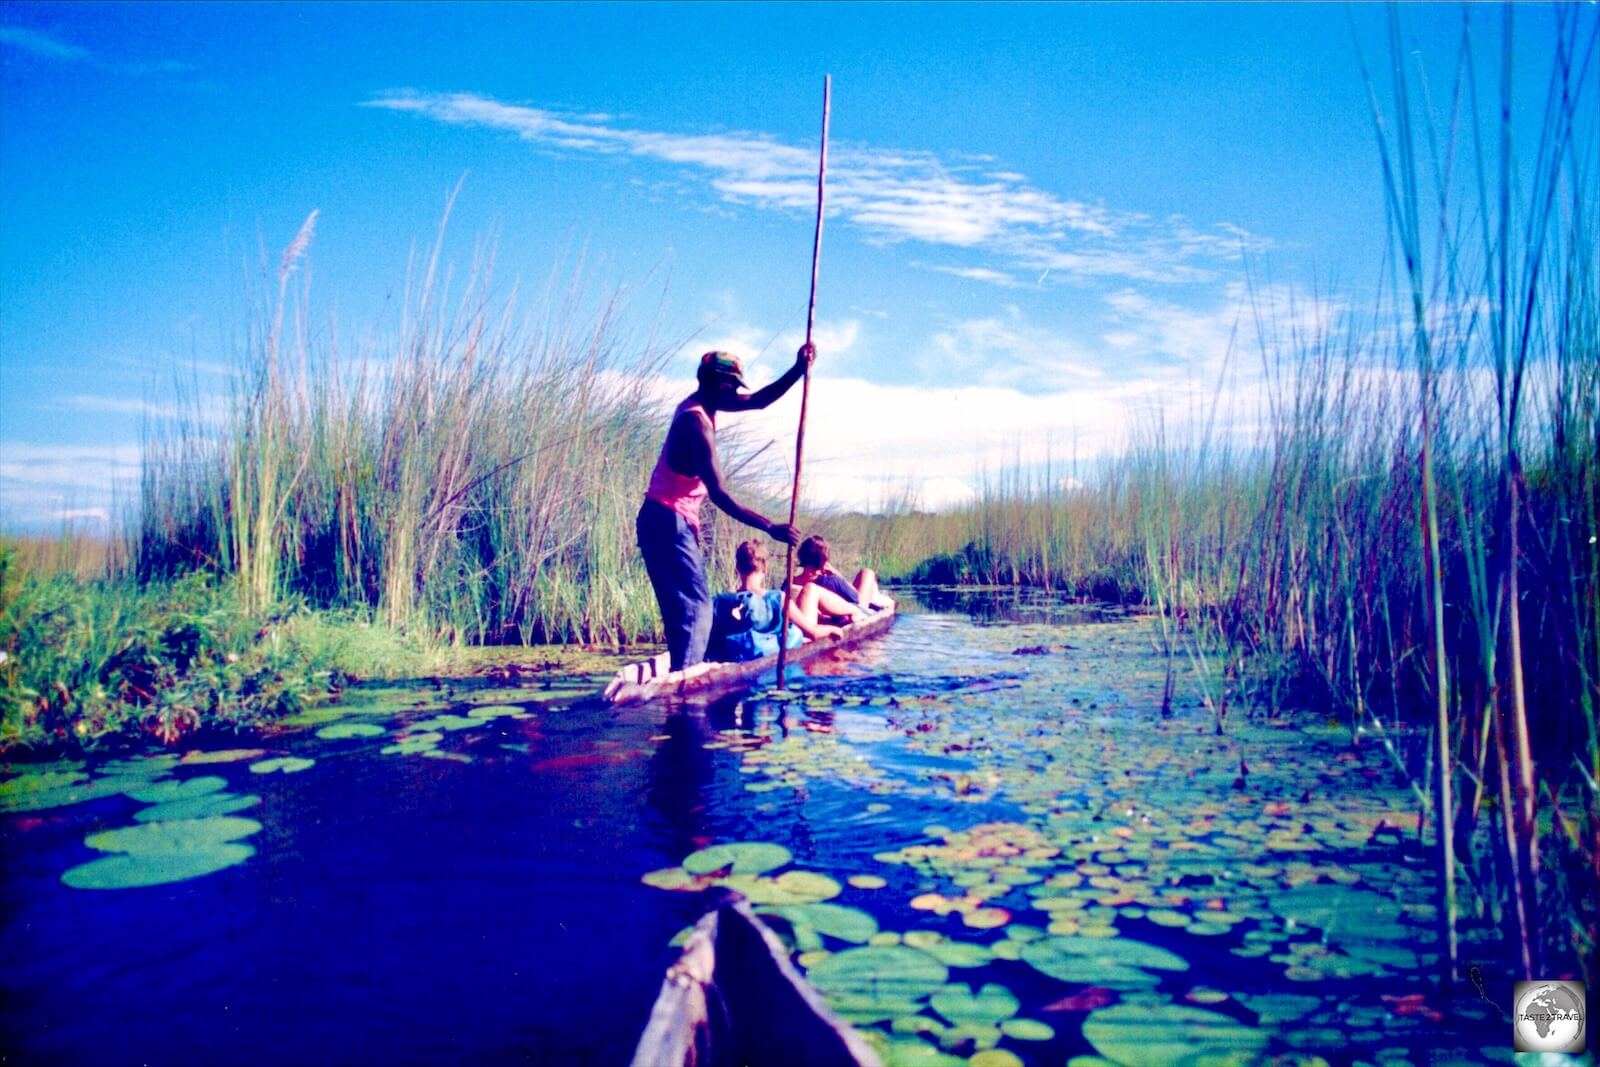 Travelling through the Okavango Delta, Botswana